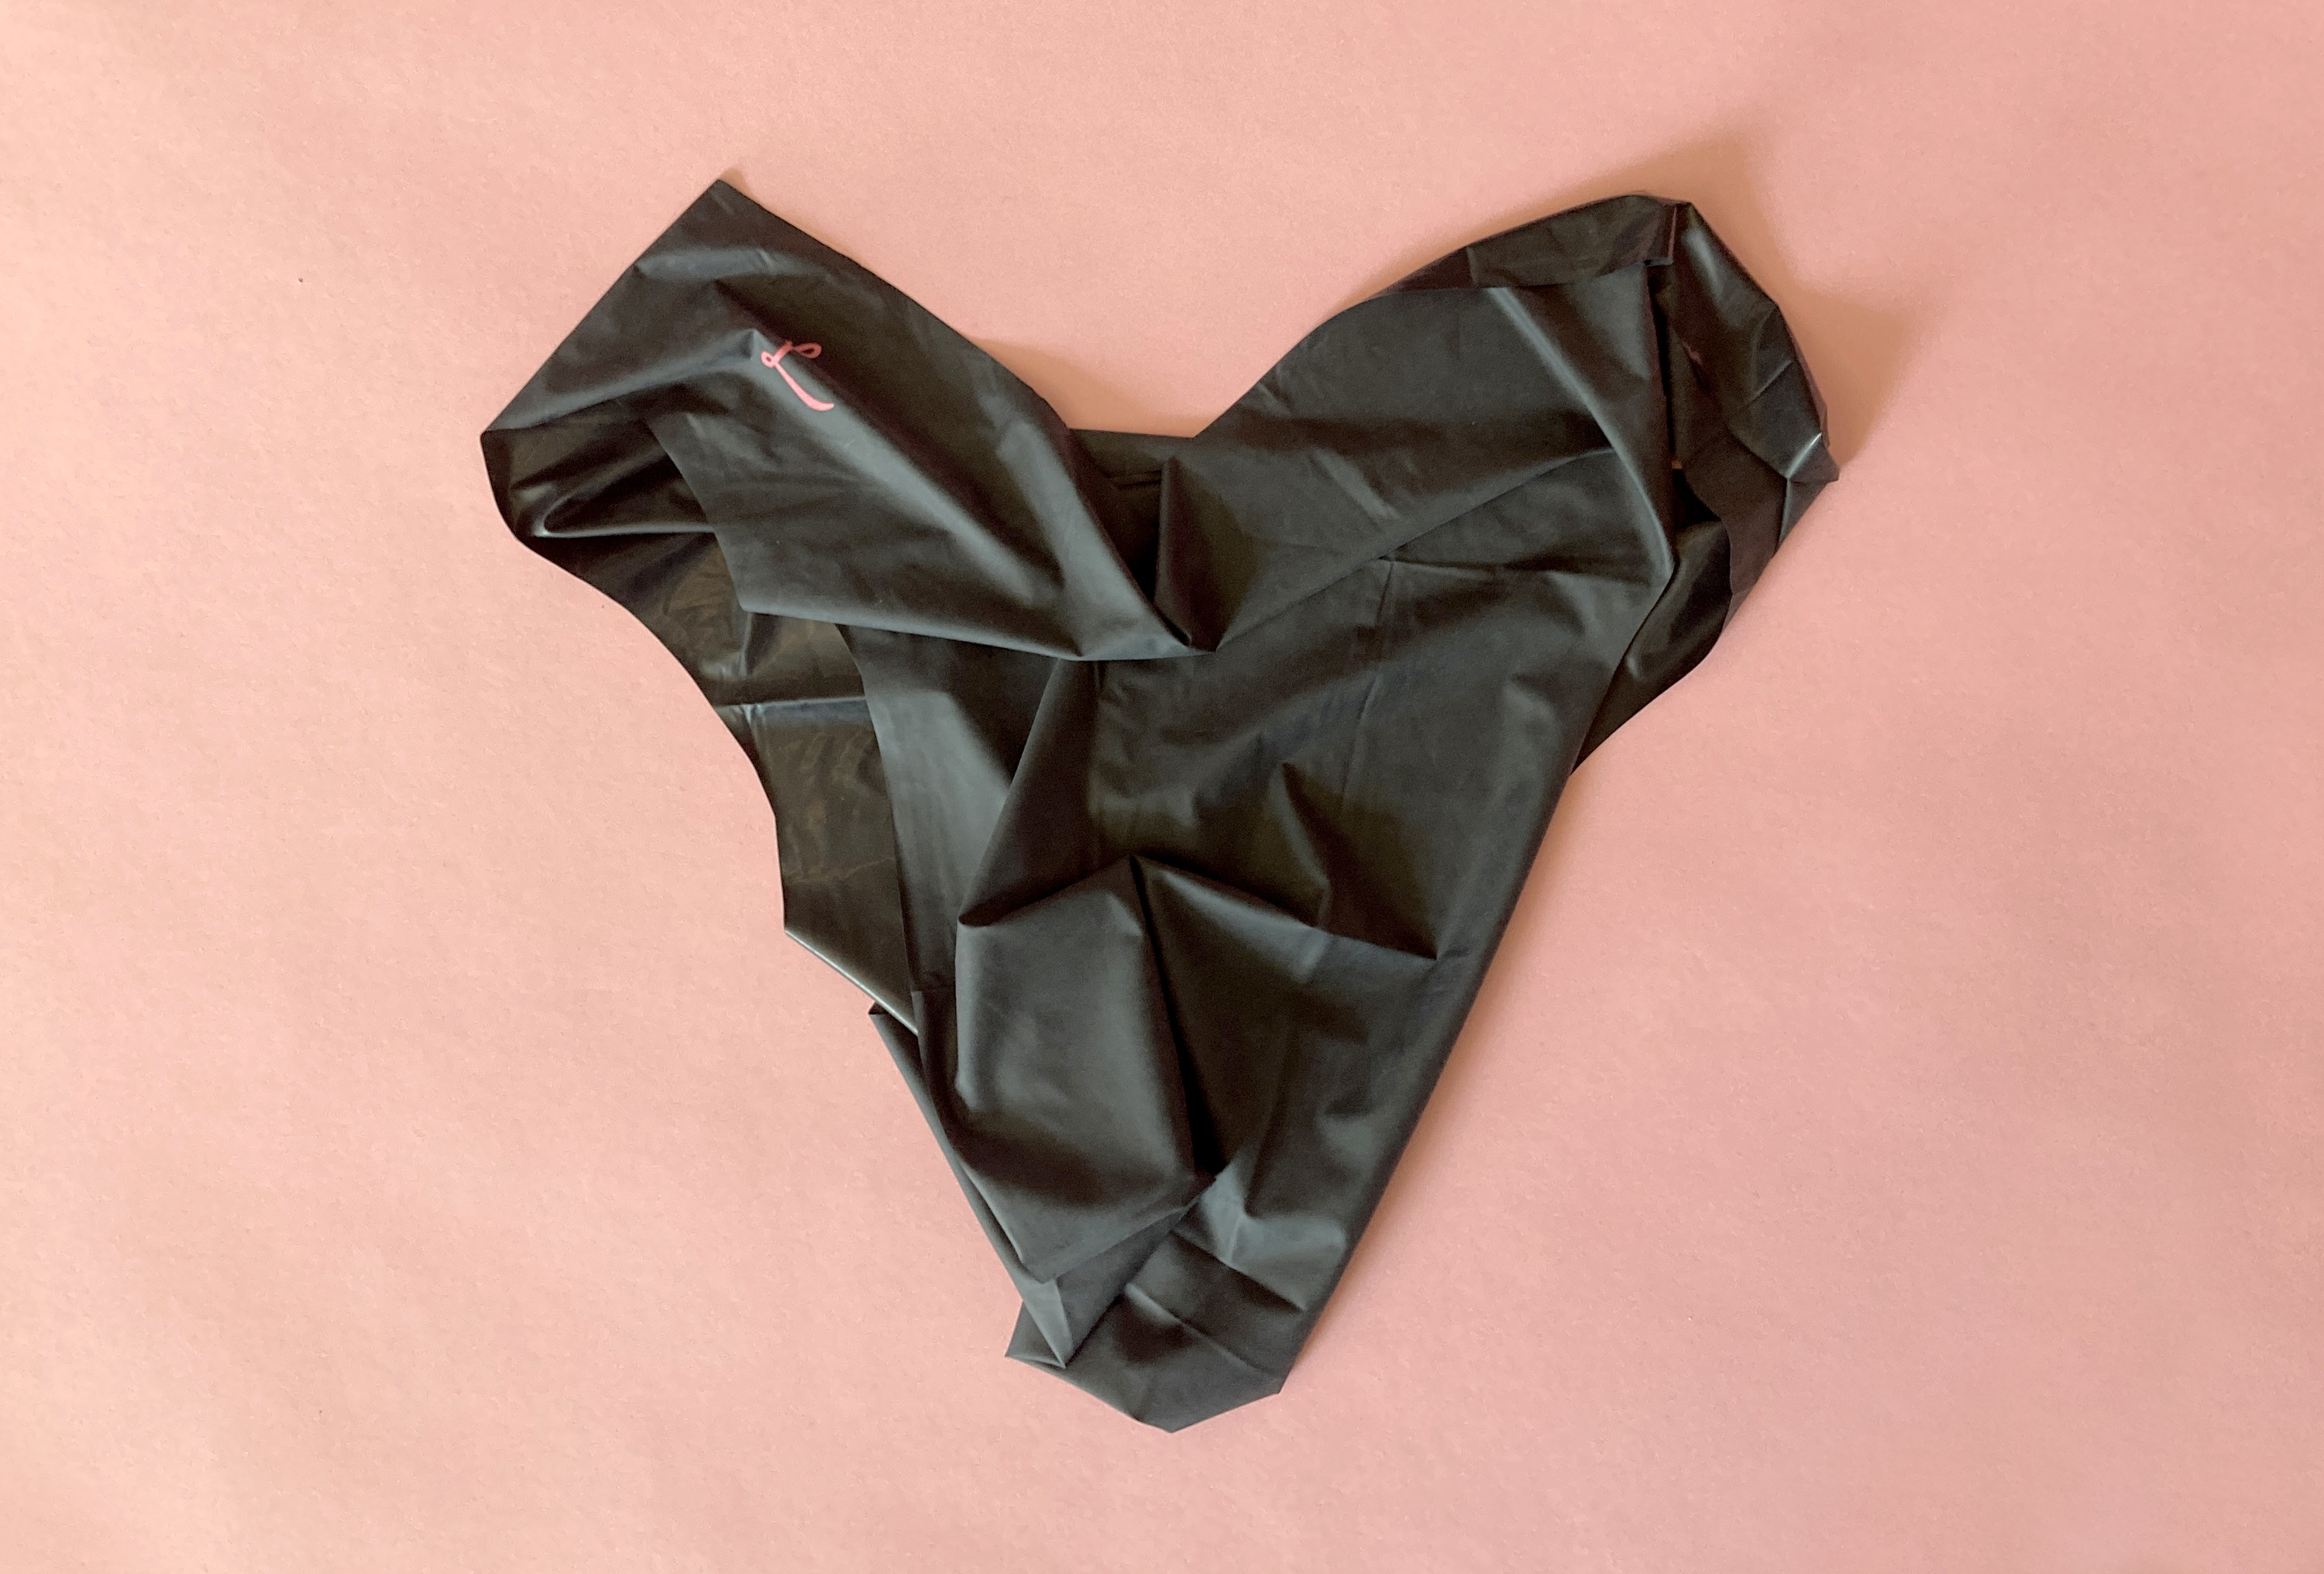 Lorals New Anti-STI Underwear For Oral Sex Gets FDA Clearance